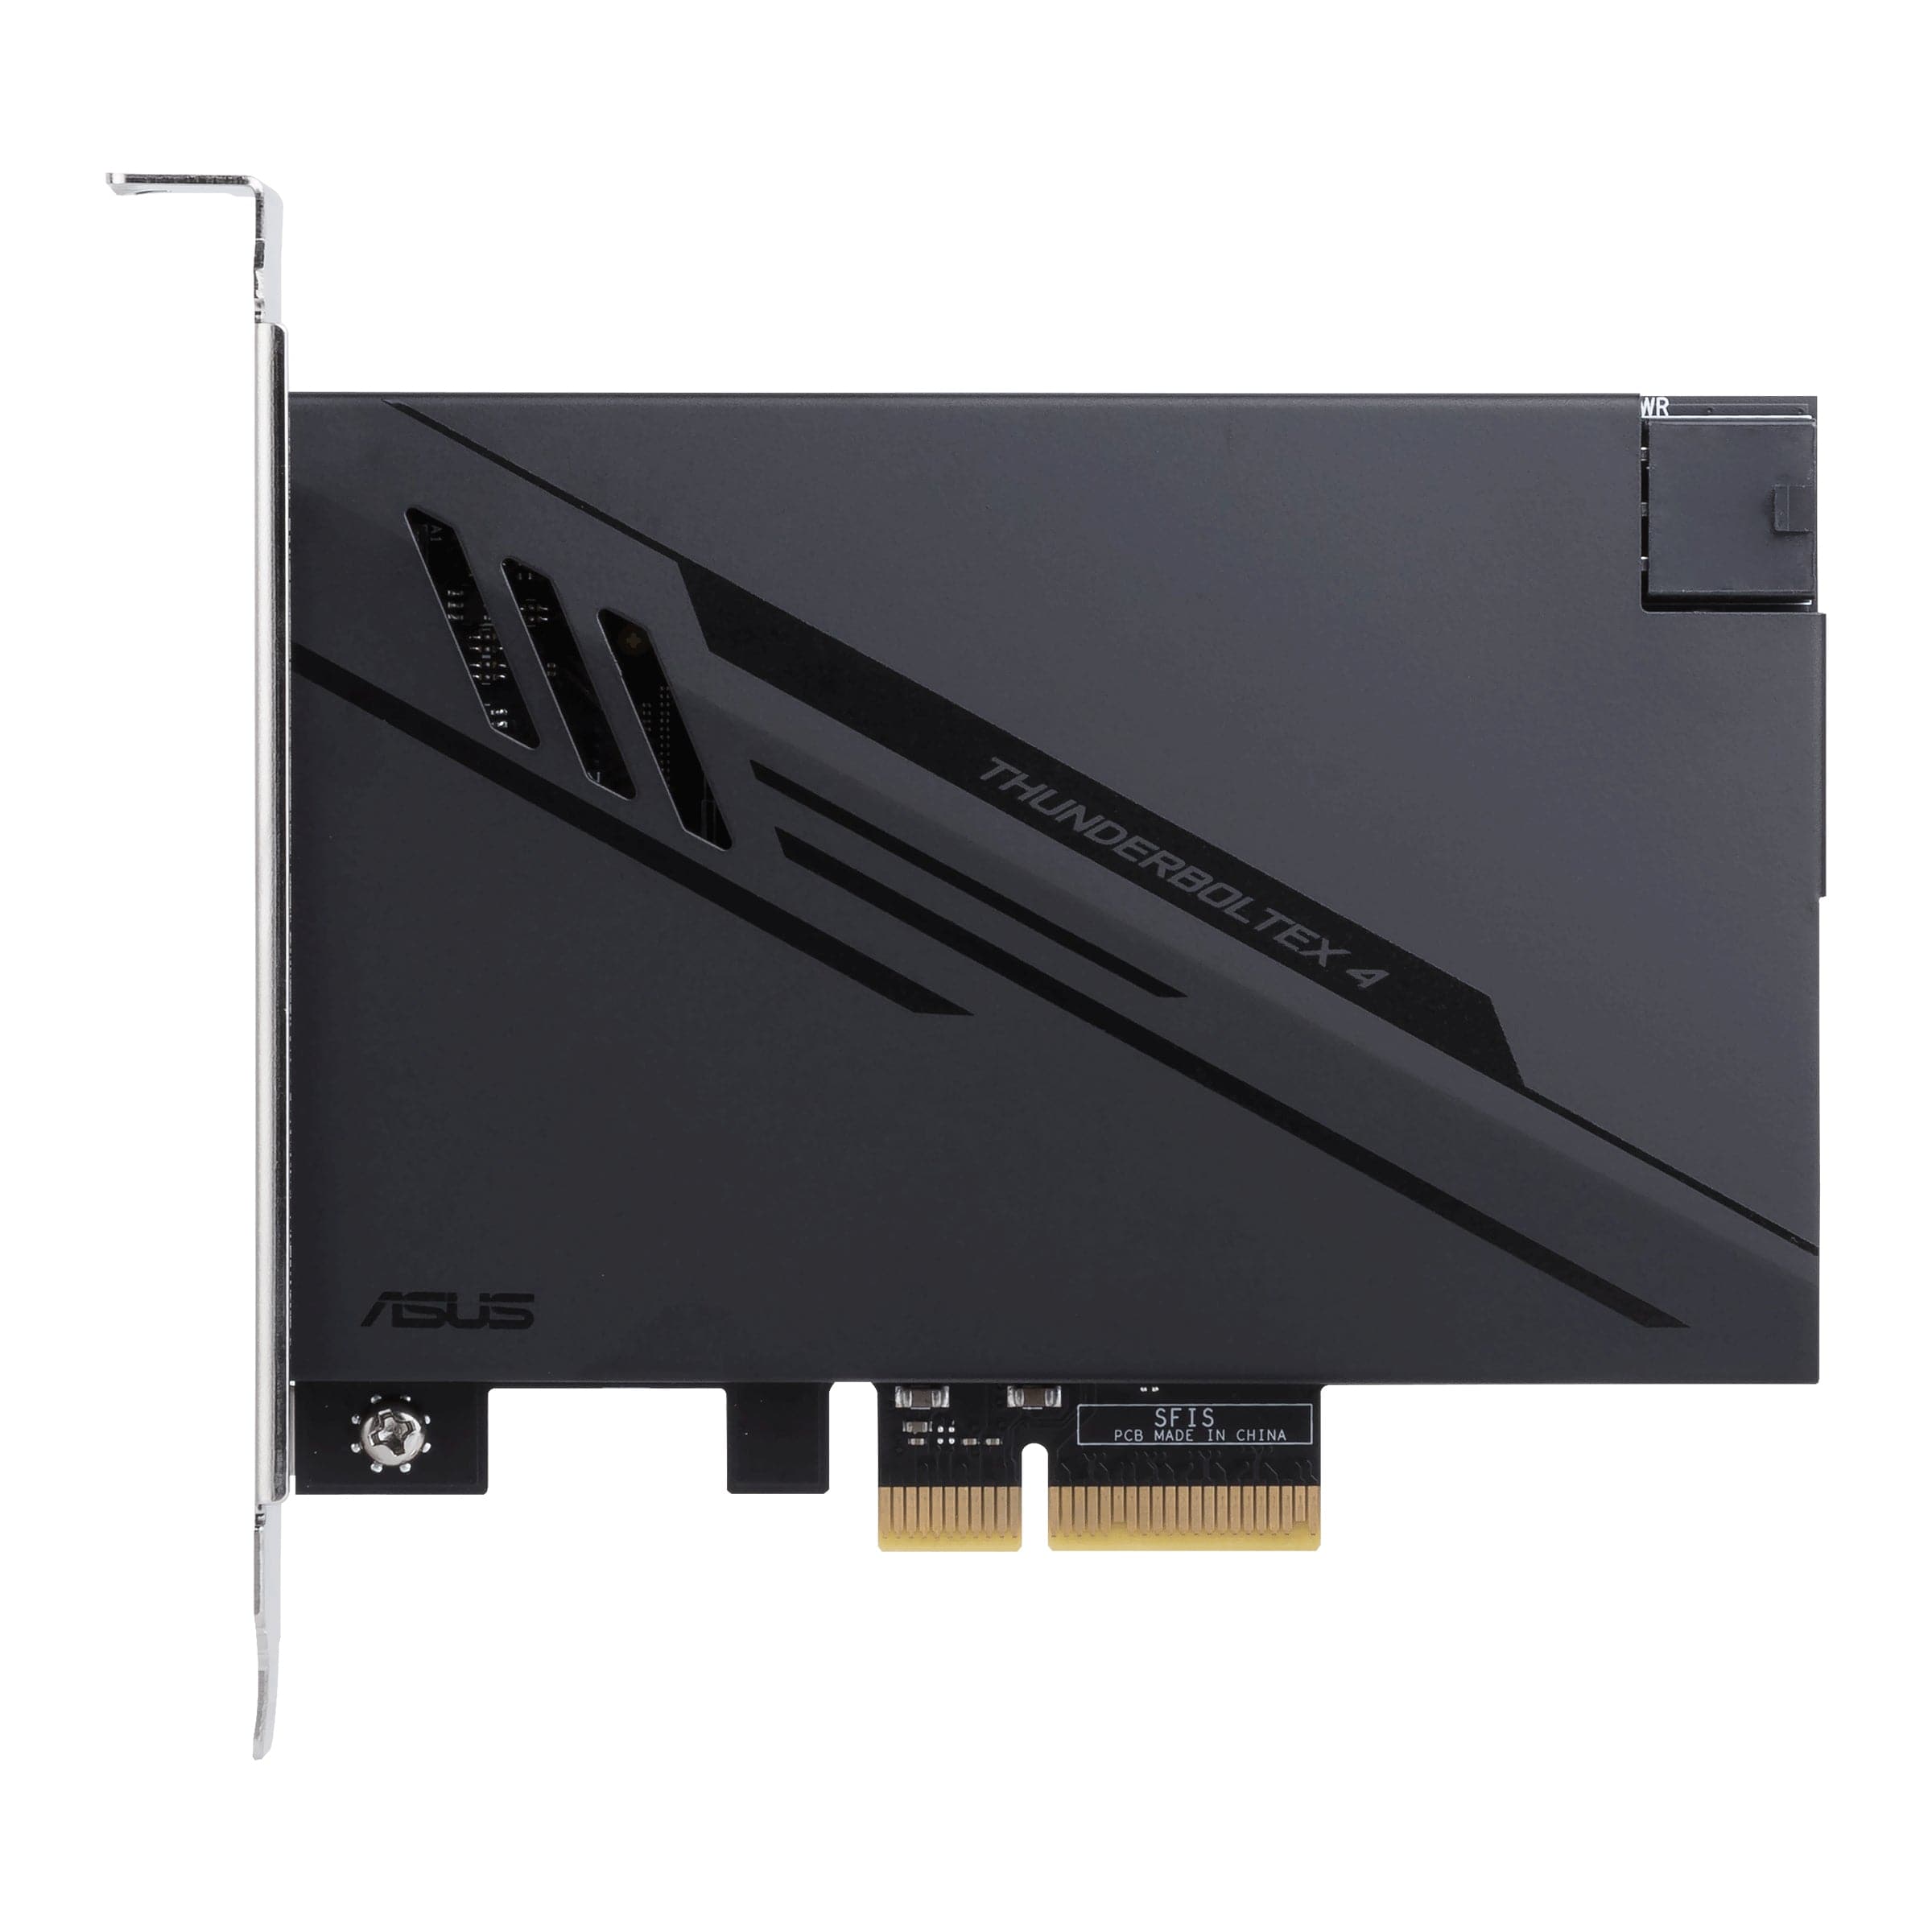 ASUS ThunderboltEX 4 PCIe-expansionskort - 2 X Thunderbolt 4 (USB-C, 40 Gbps, 100W QC), 2 X MiniDP